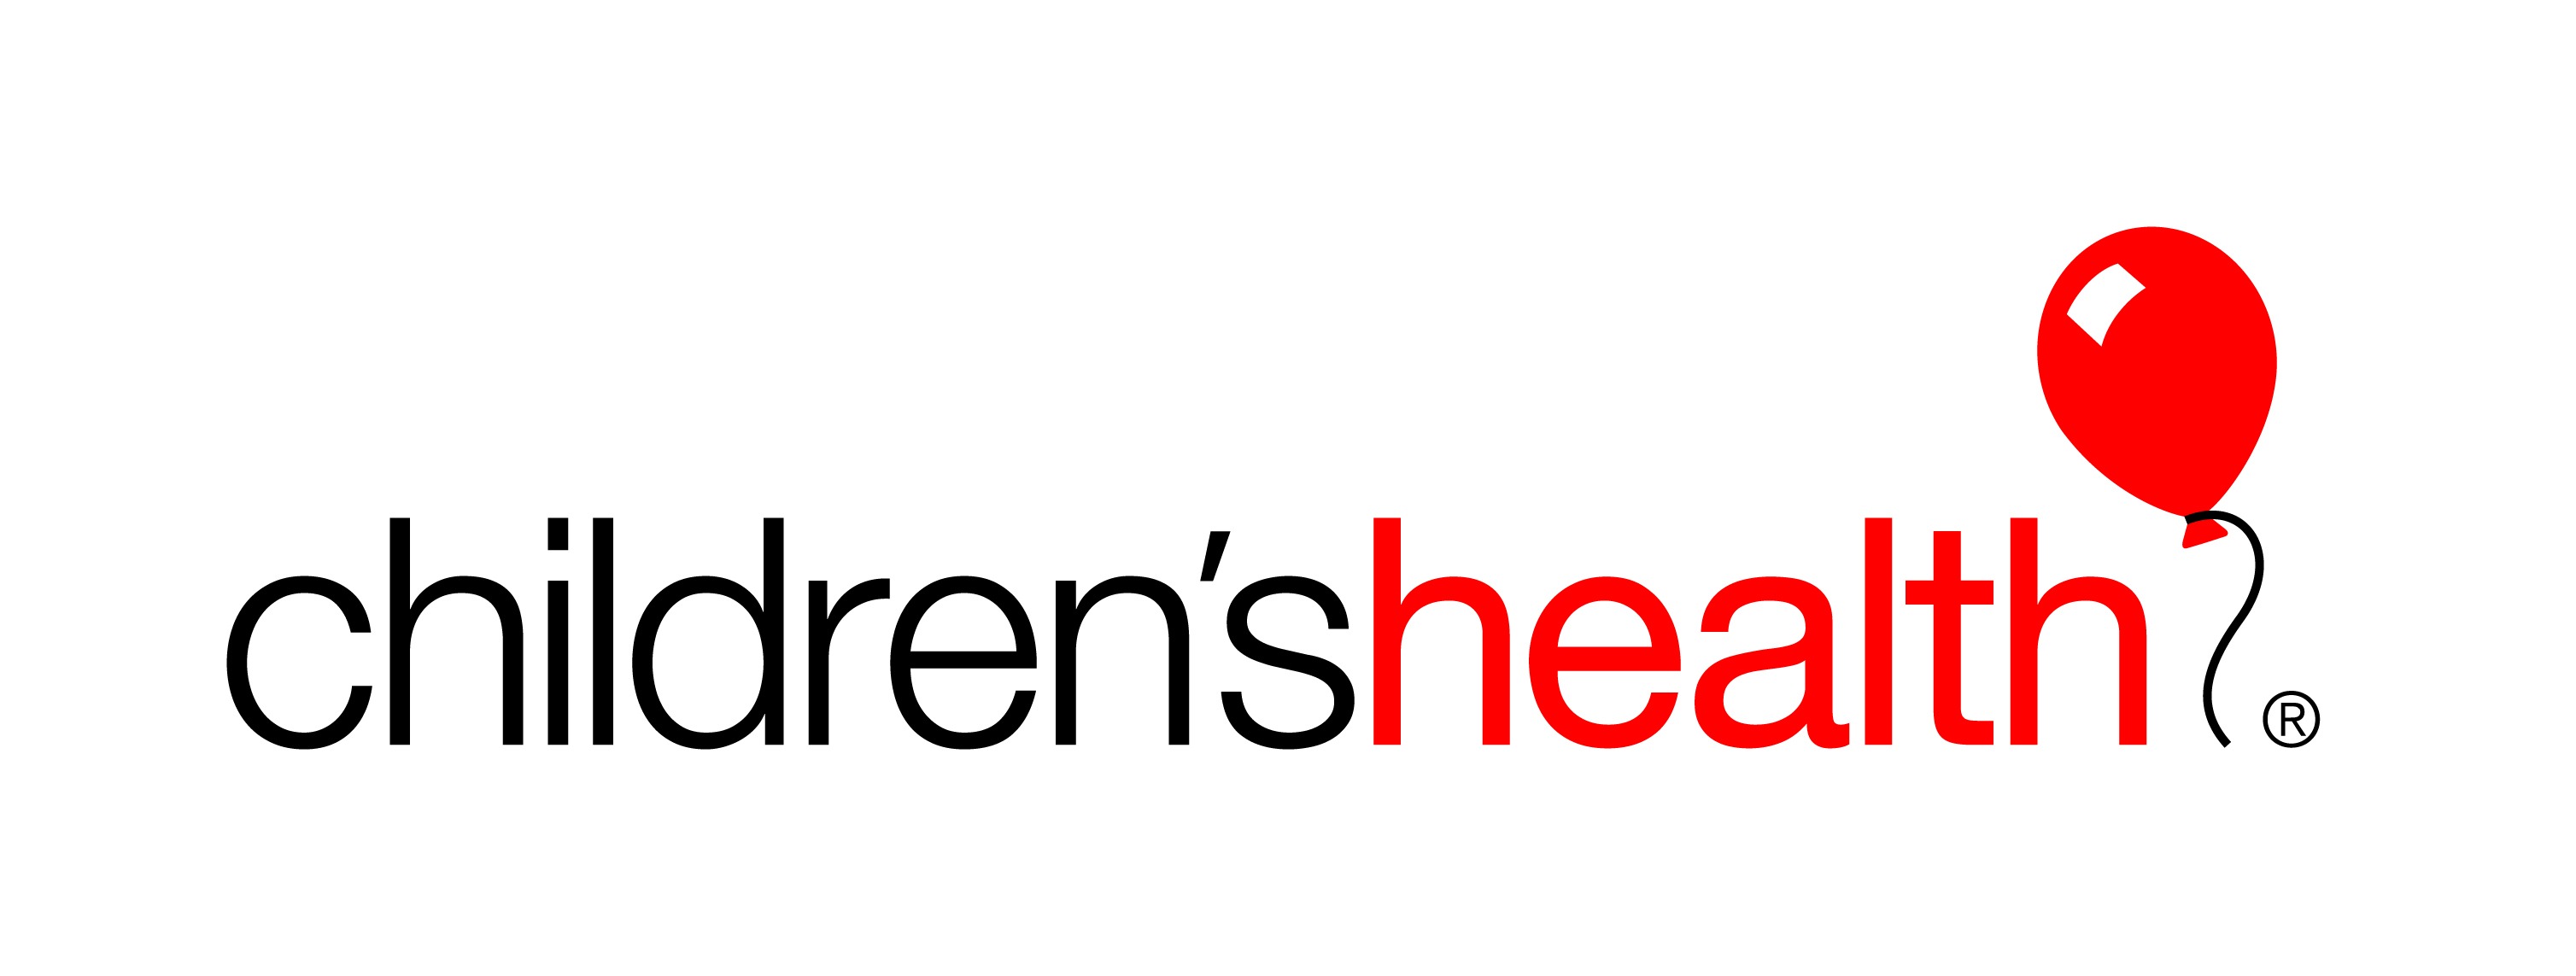 Children’s Health Creates Best-Performing Newsletter in Organization’s History - Logo - https://s41078.pcdn.co/wp-content/uploads/2019/09/Patient-Childrens.jpg